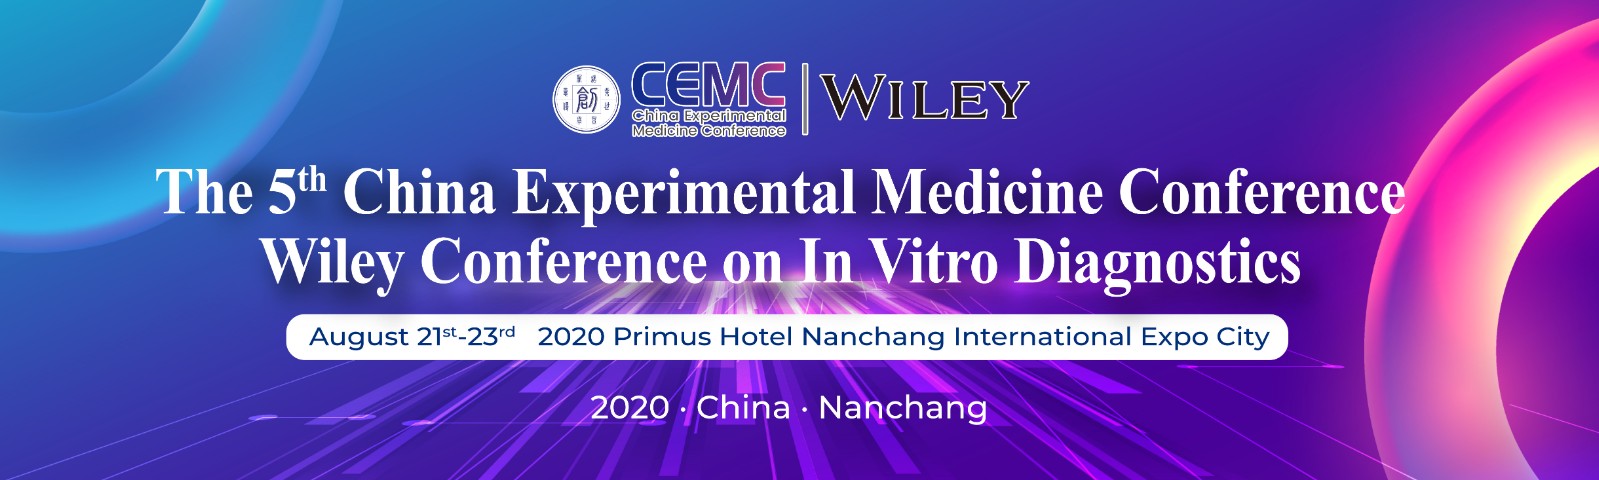  The 5th Chinese Experimental Medicine Conference (CEMC)  / Wiley Conference on In Vitro Diagnostics 